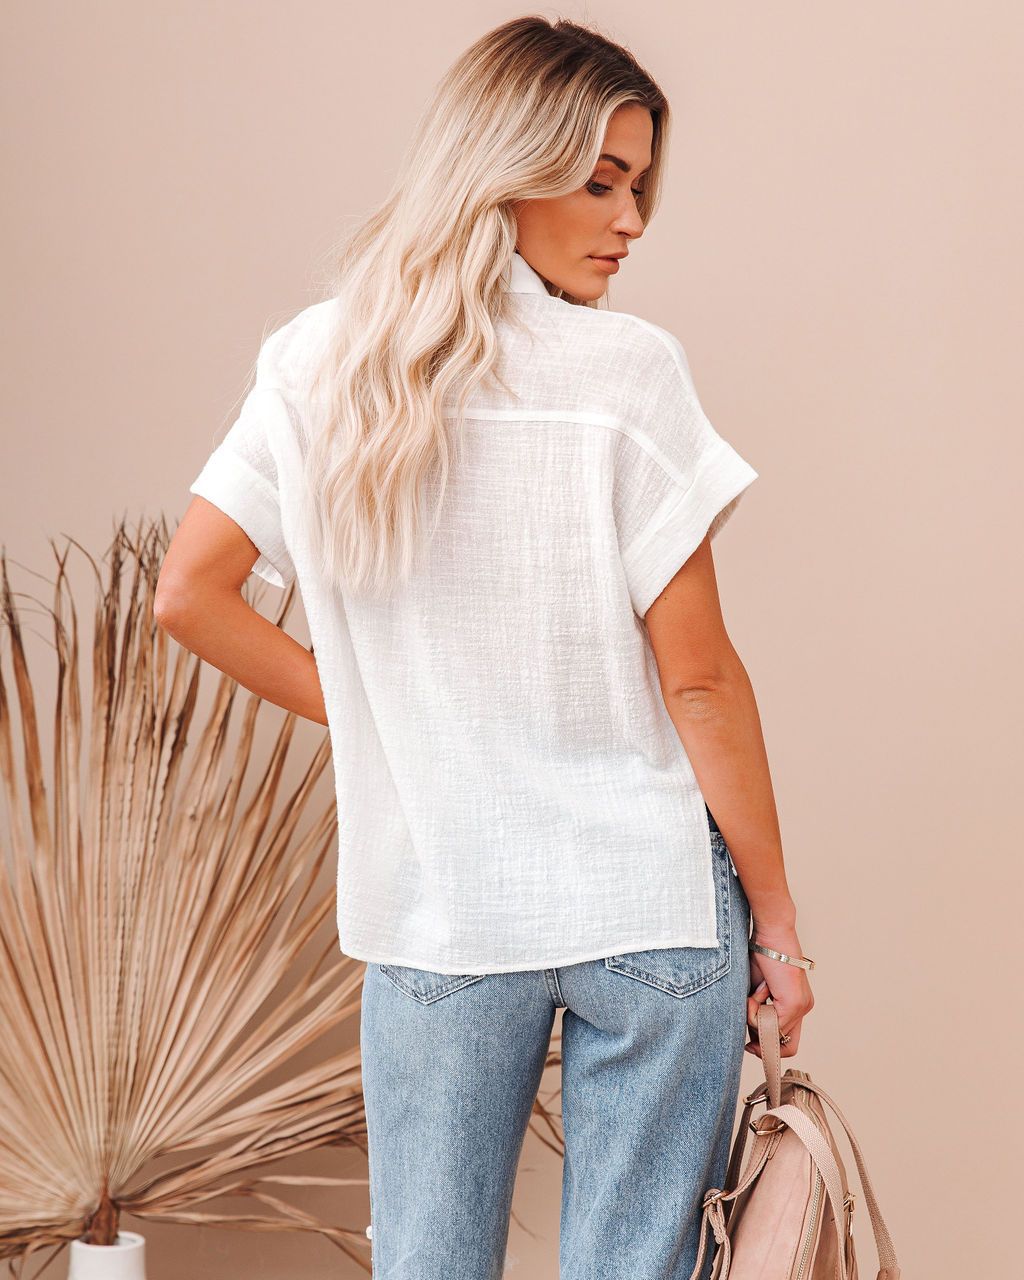 Women's Summer Cotton Linen Sleeve Lapel Button Blouses